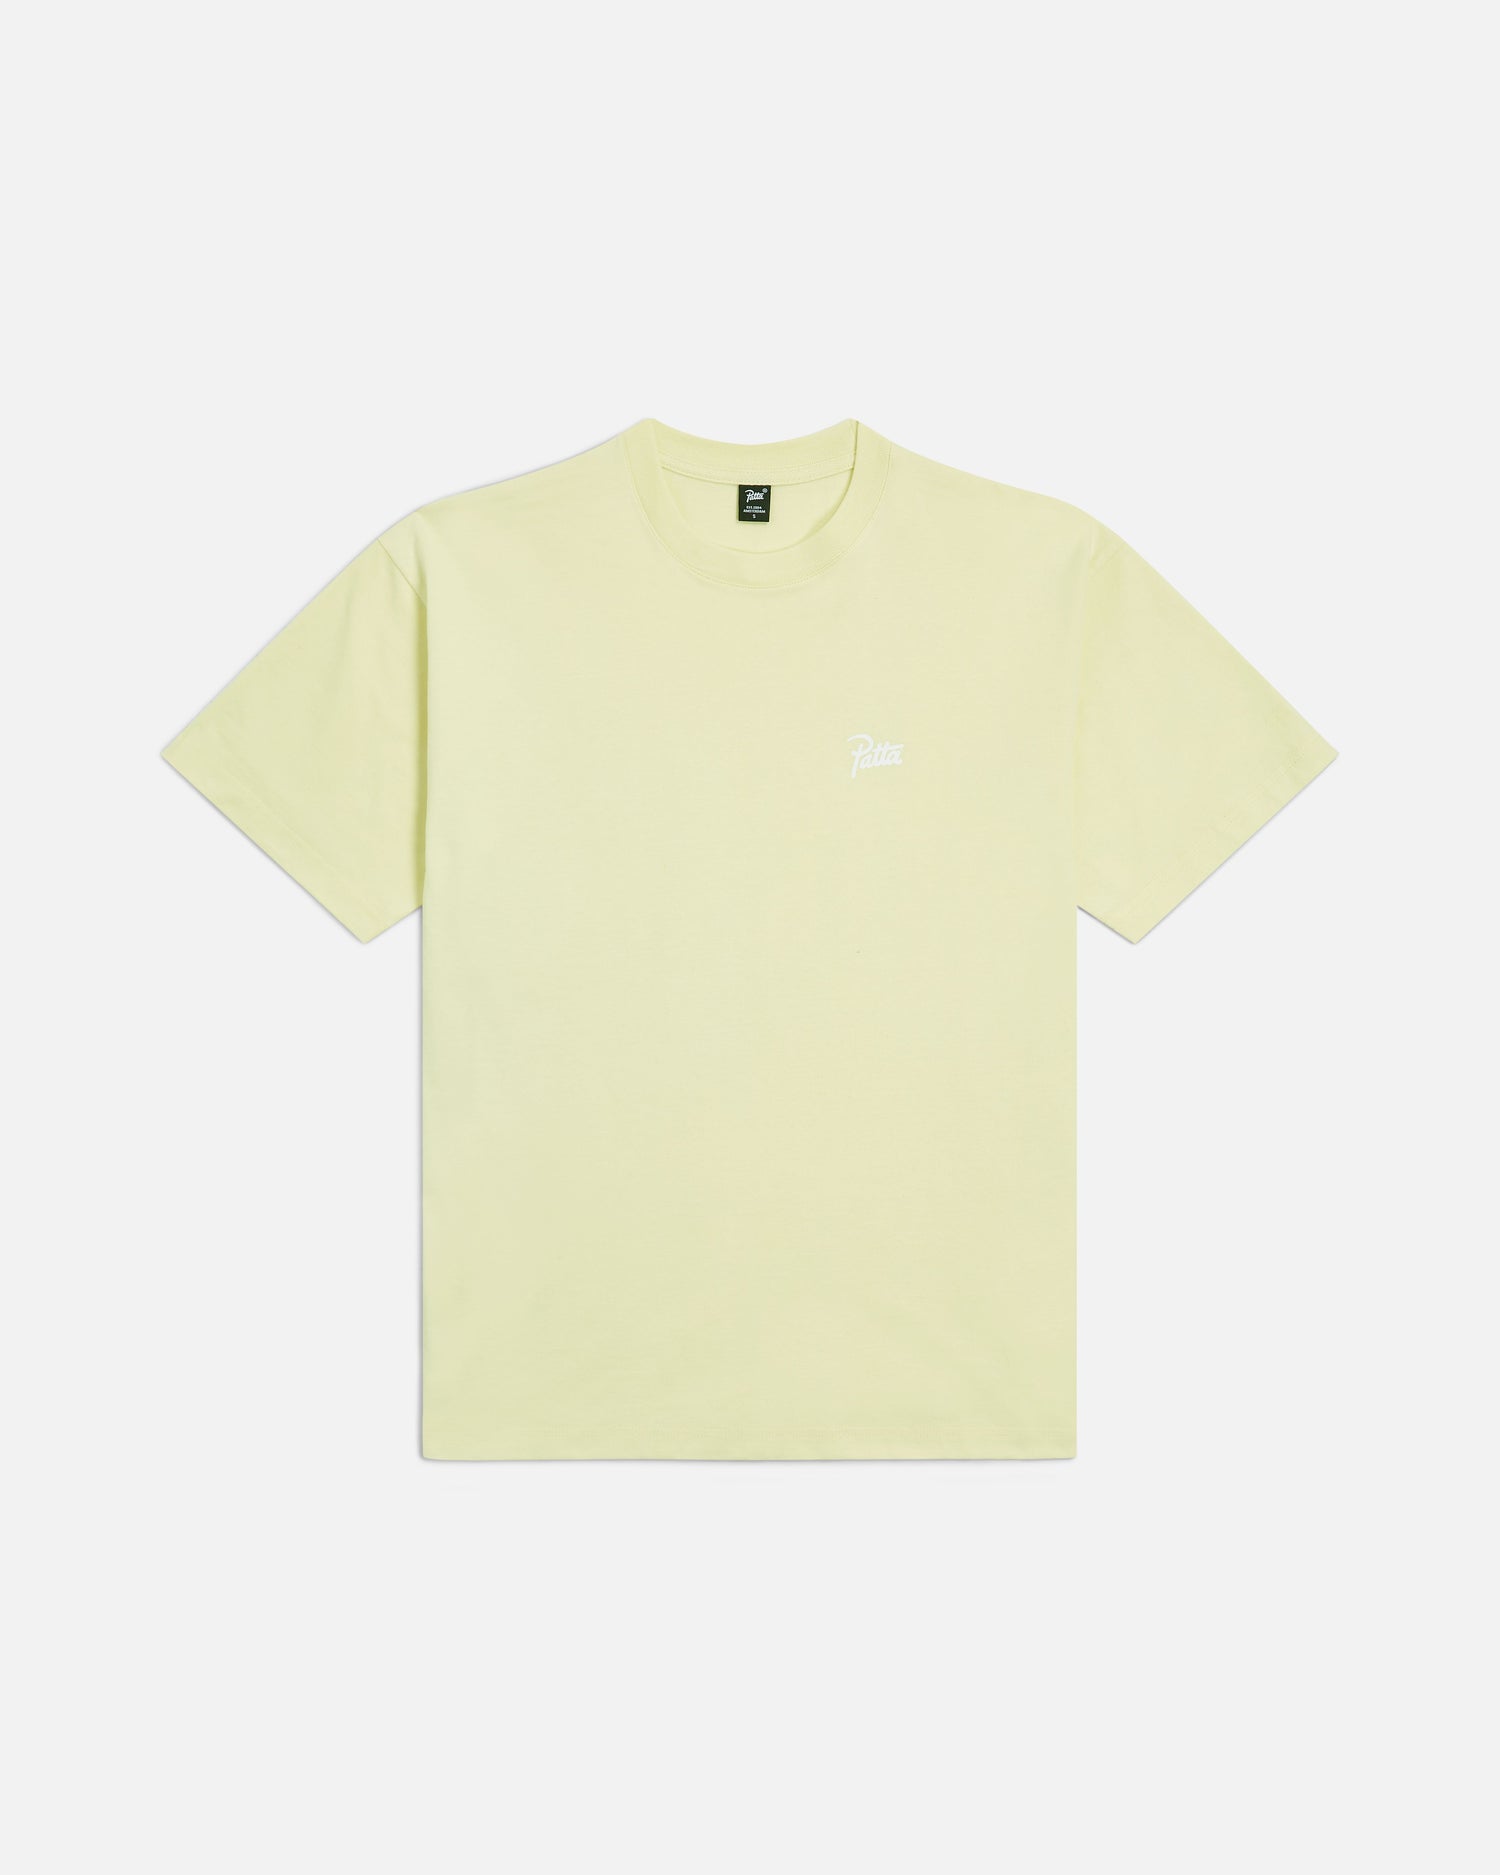 Patta A qualcuno piace caldo T-shirt (giallo cera)